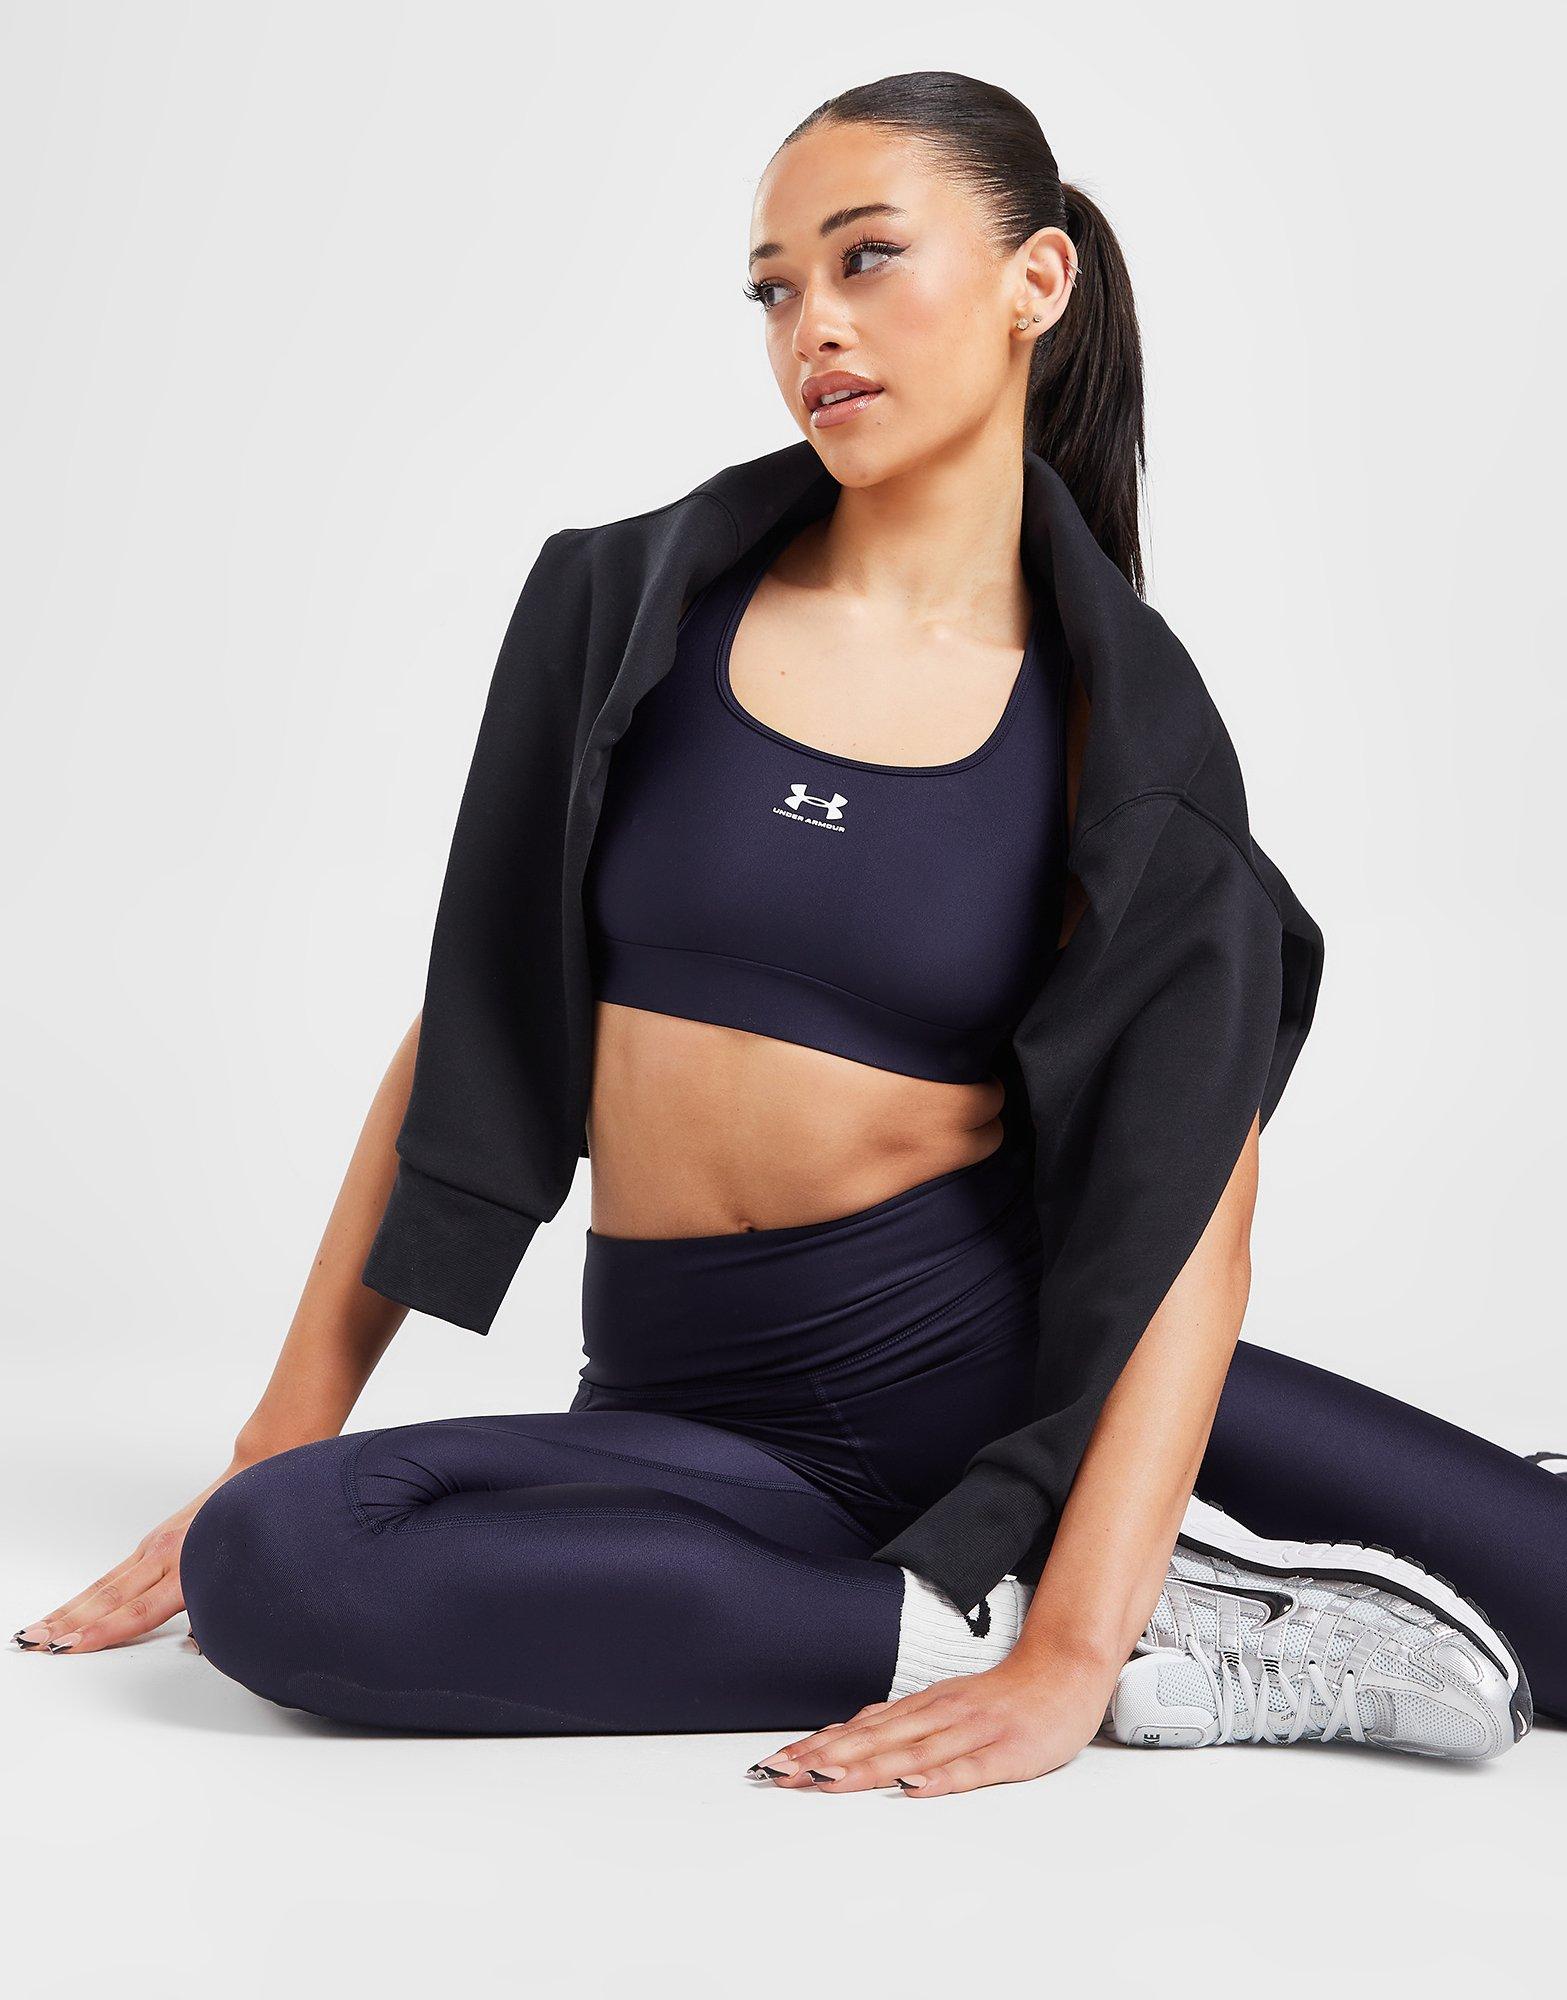 $99 Adidas Women's Black V-Neck Low-Impact Compression Active Sports Bra  Size XS